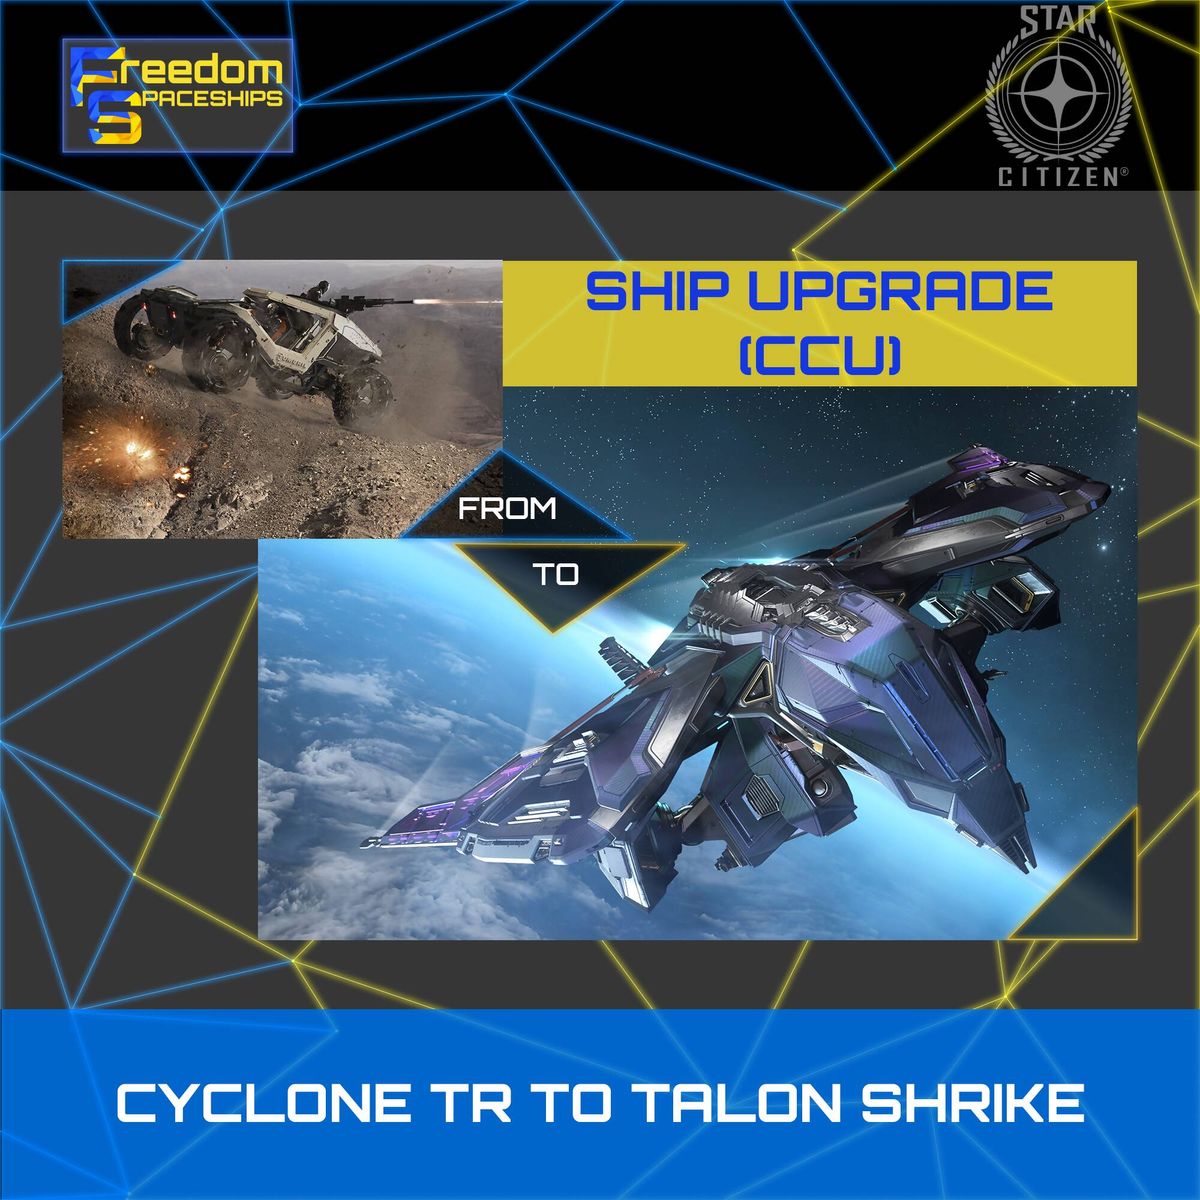 Upgrade - Cyclone TR to Talon Shrike